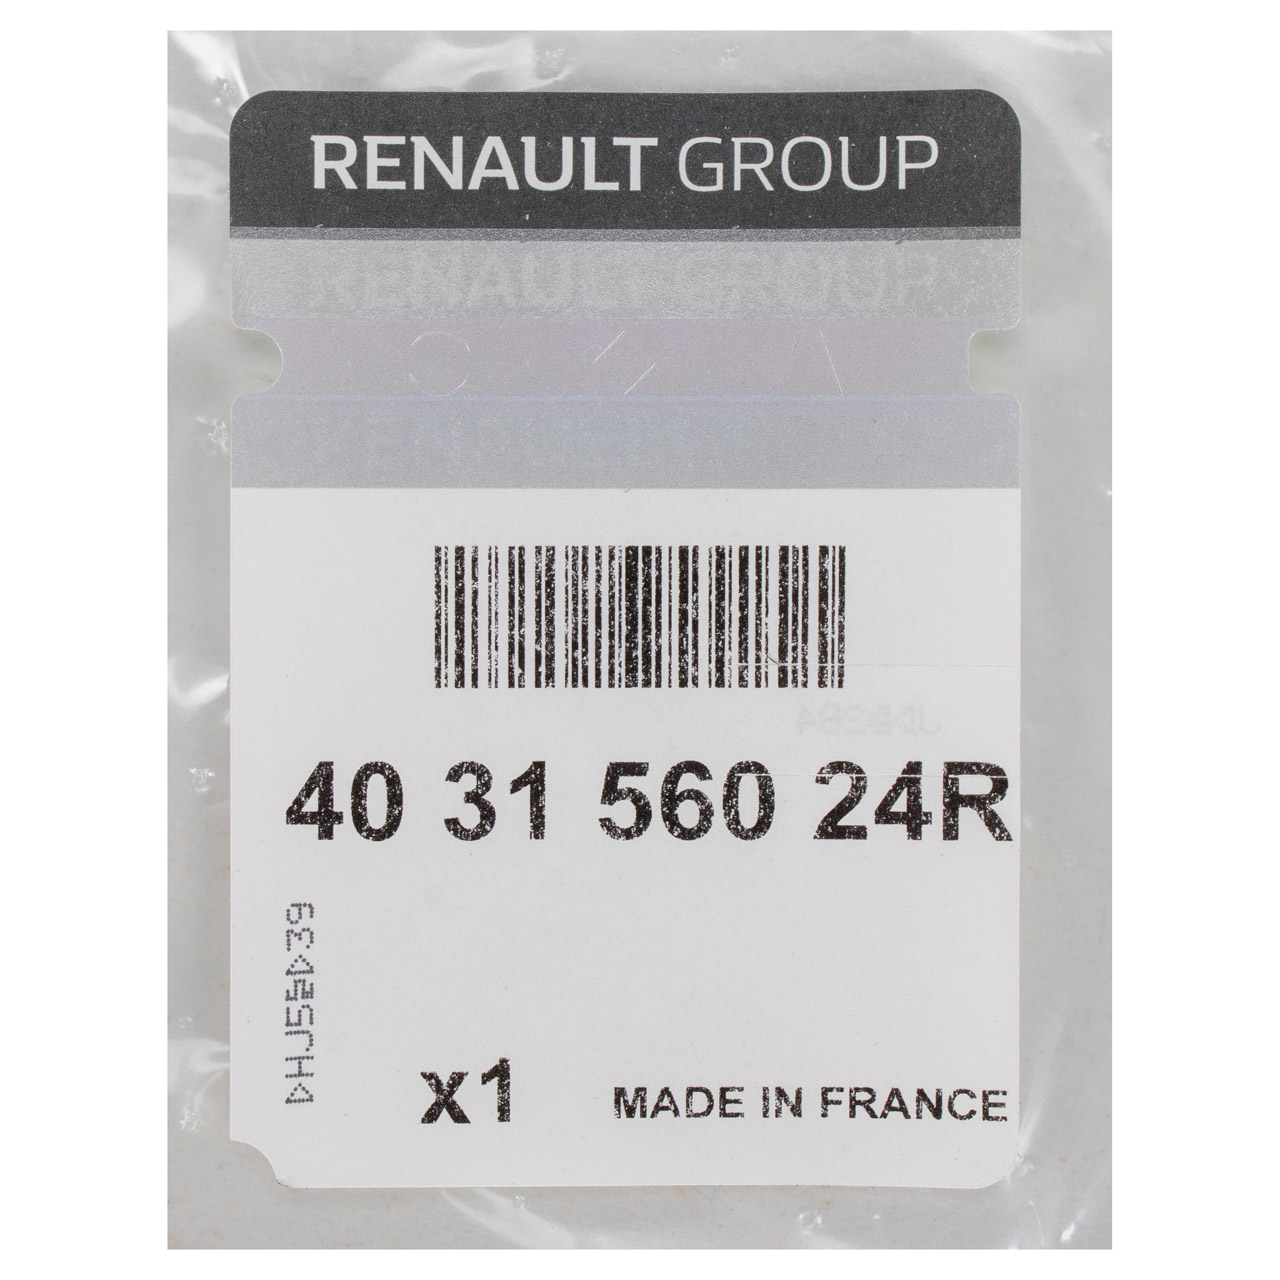 1x ORIGINAL Renault Radkappe Radblende 15 Zoll Silber Schwarz Twingo 3 403156024R